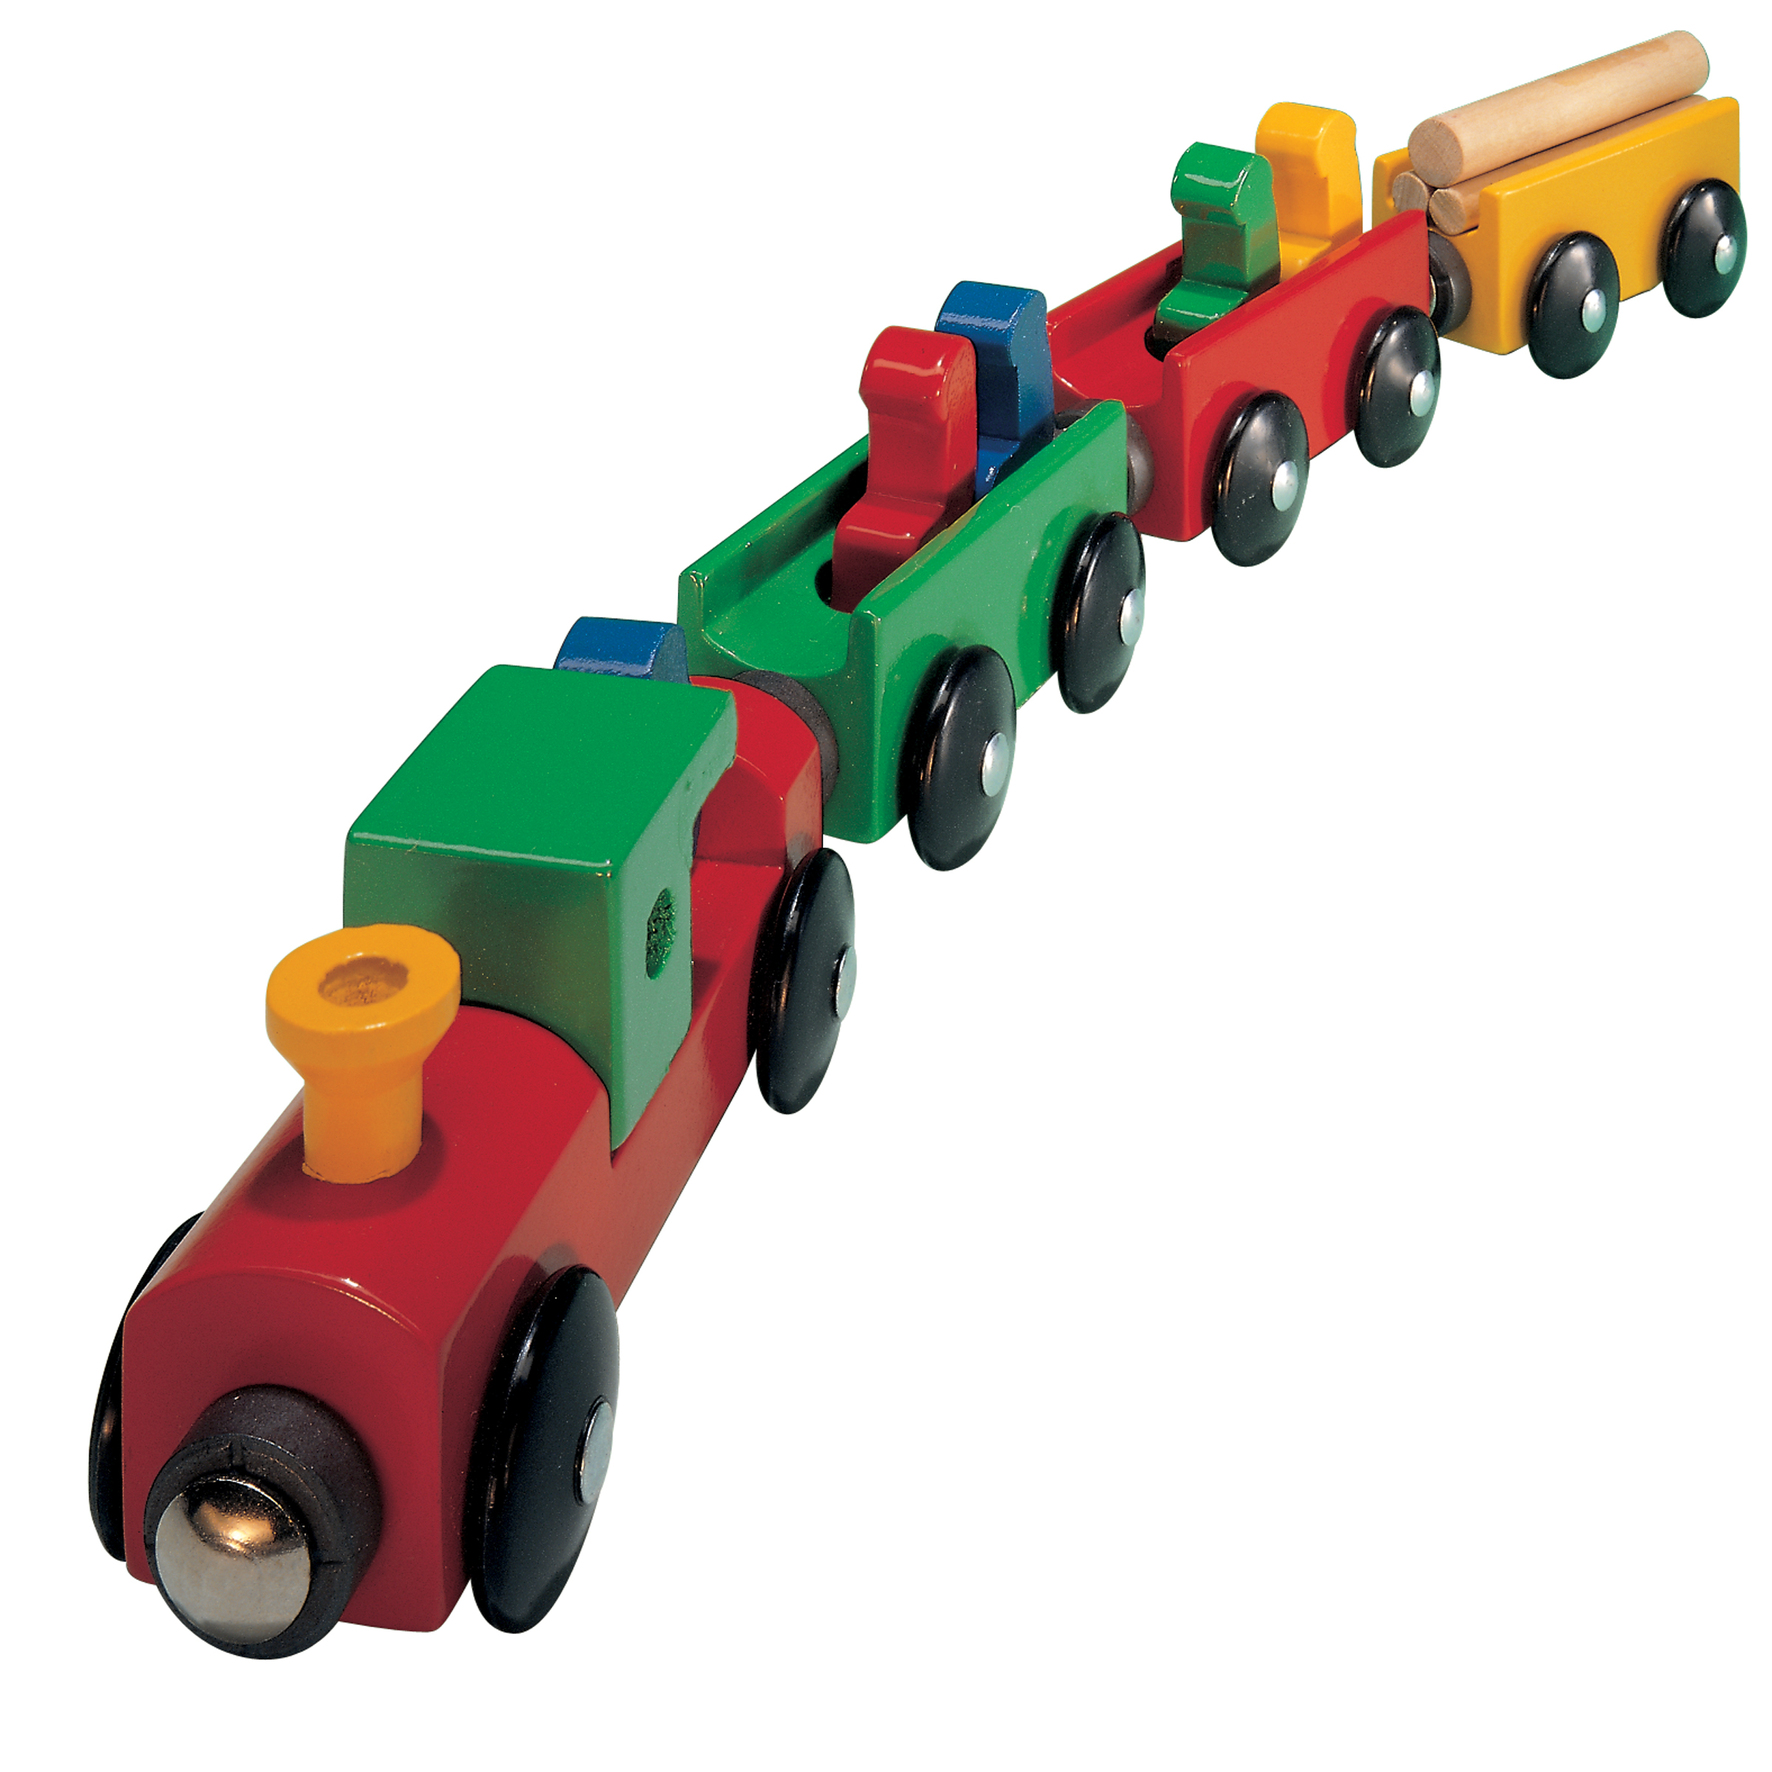 Wooden toys micki train set passenger train wooden